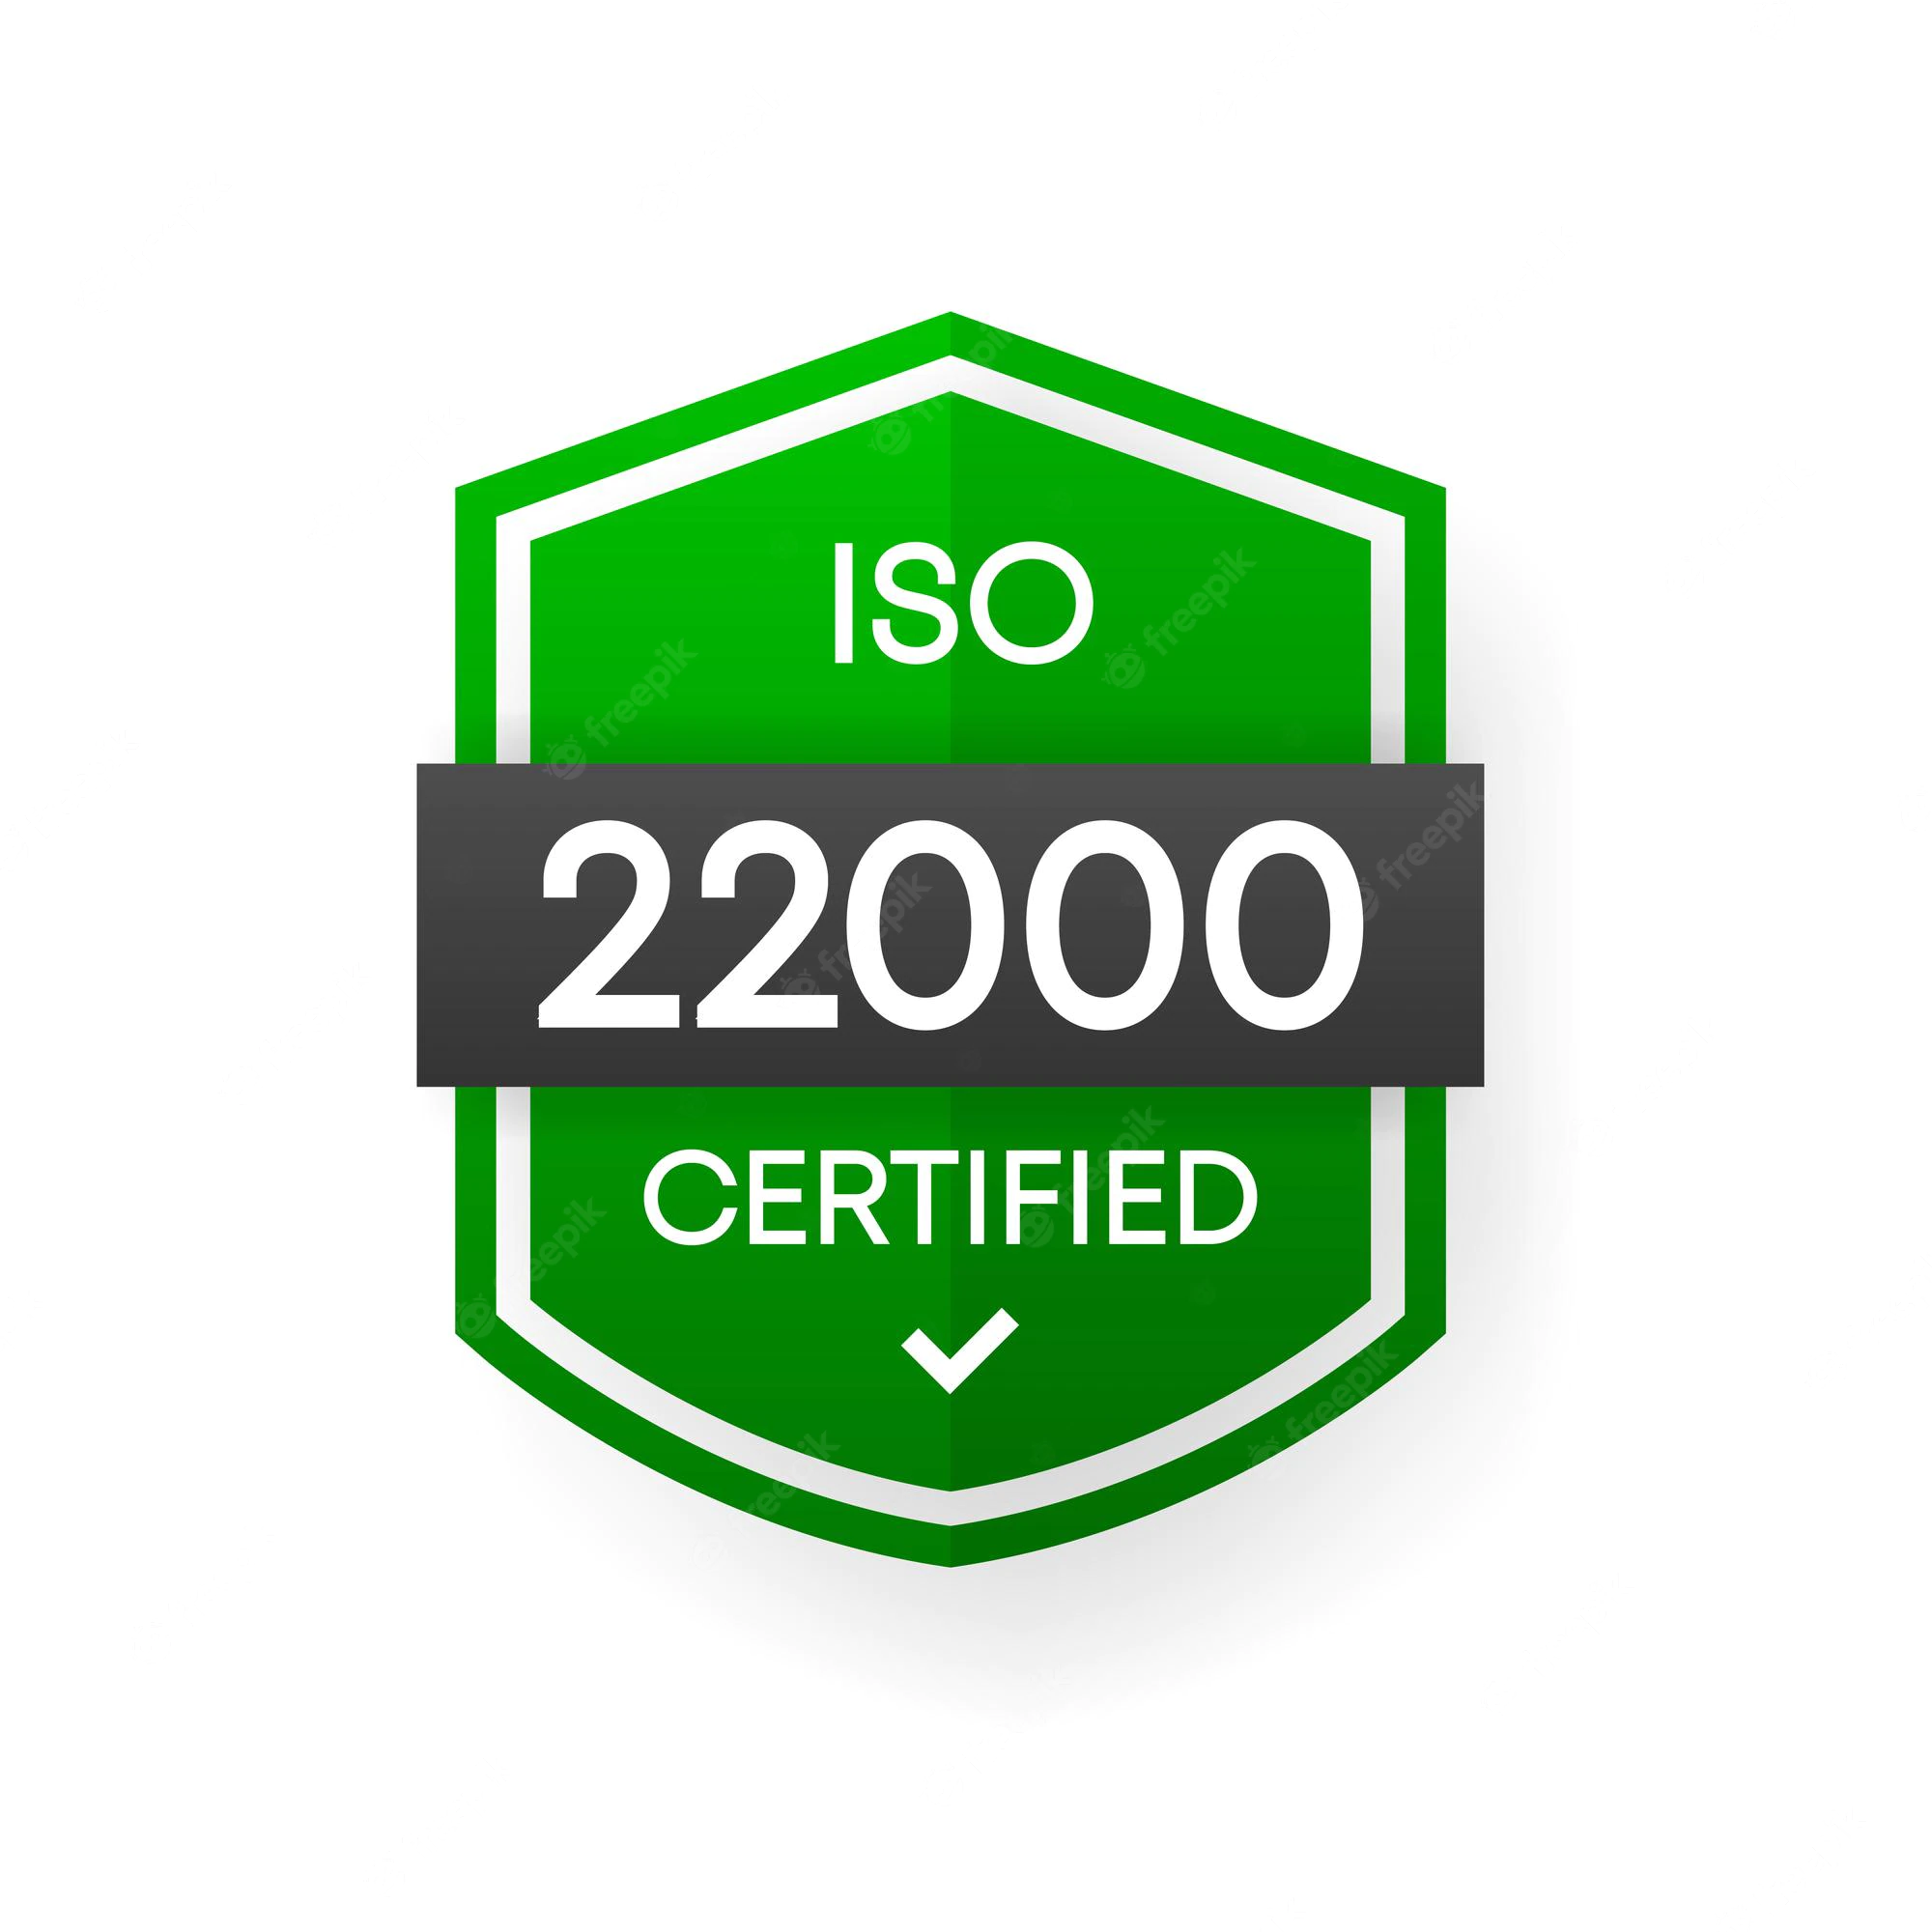 Khó khăn khi triển khai ISO 22000